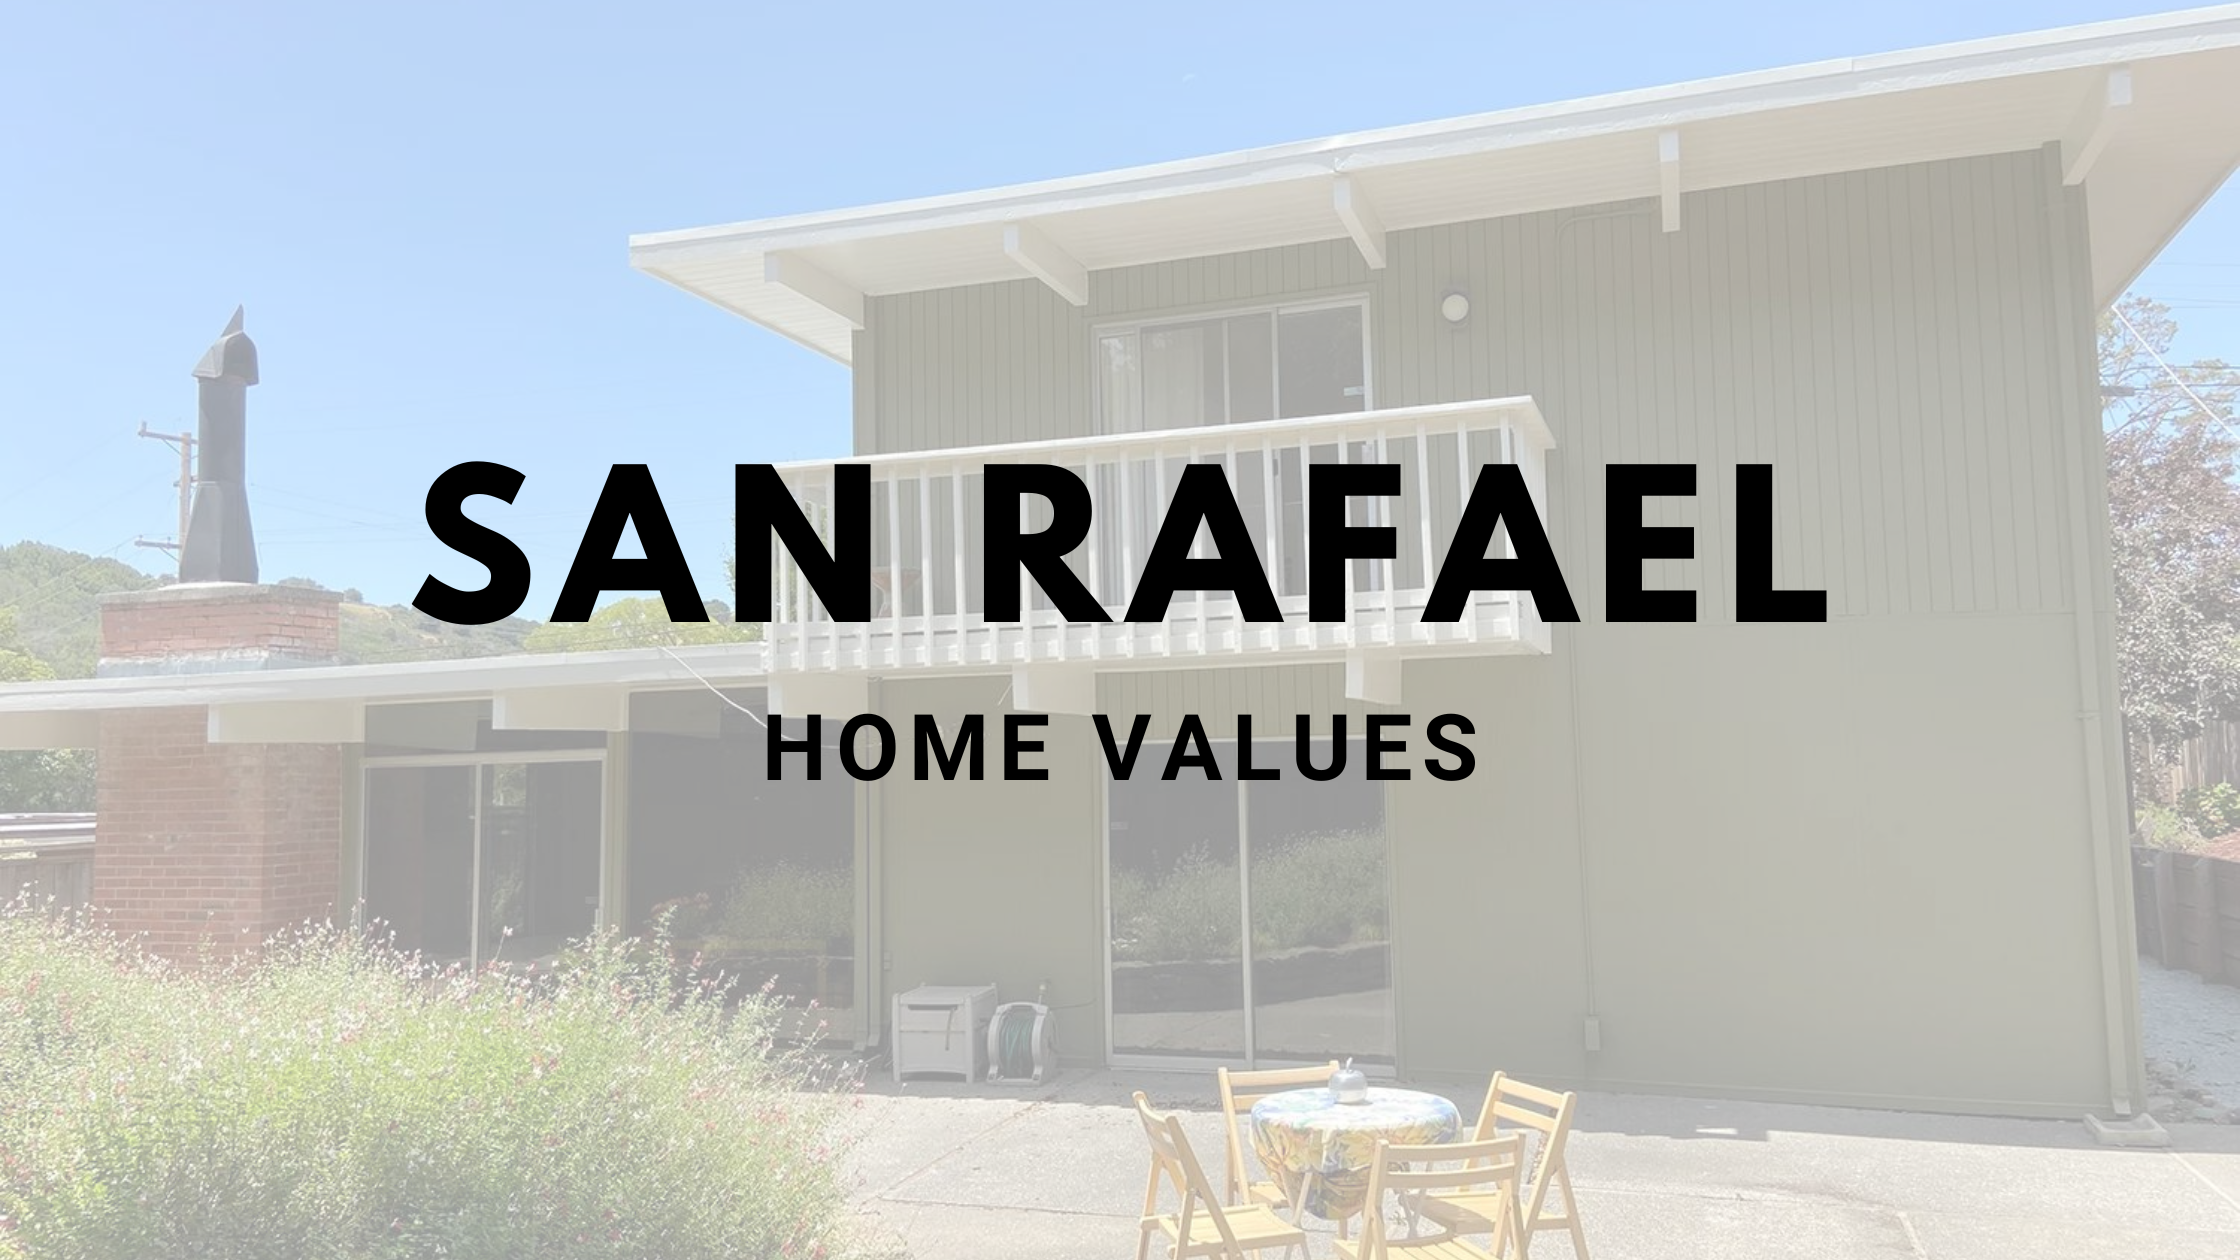 San Rafael Home Values